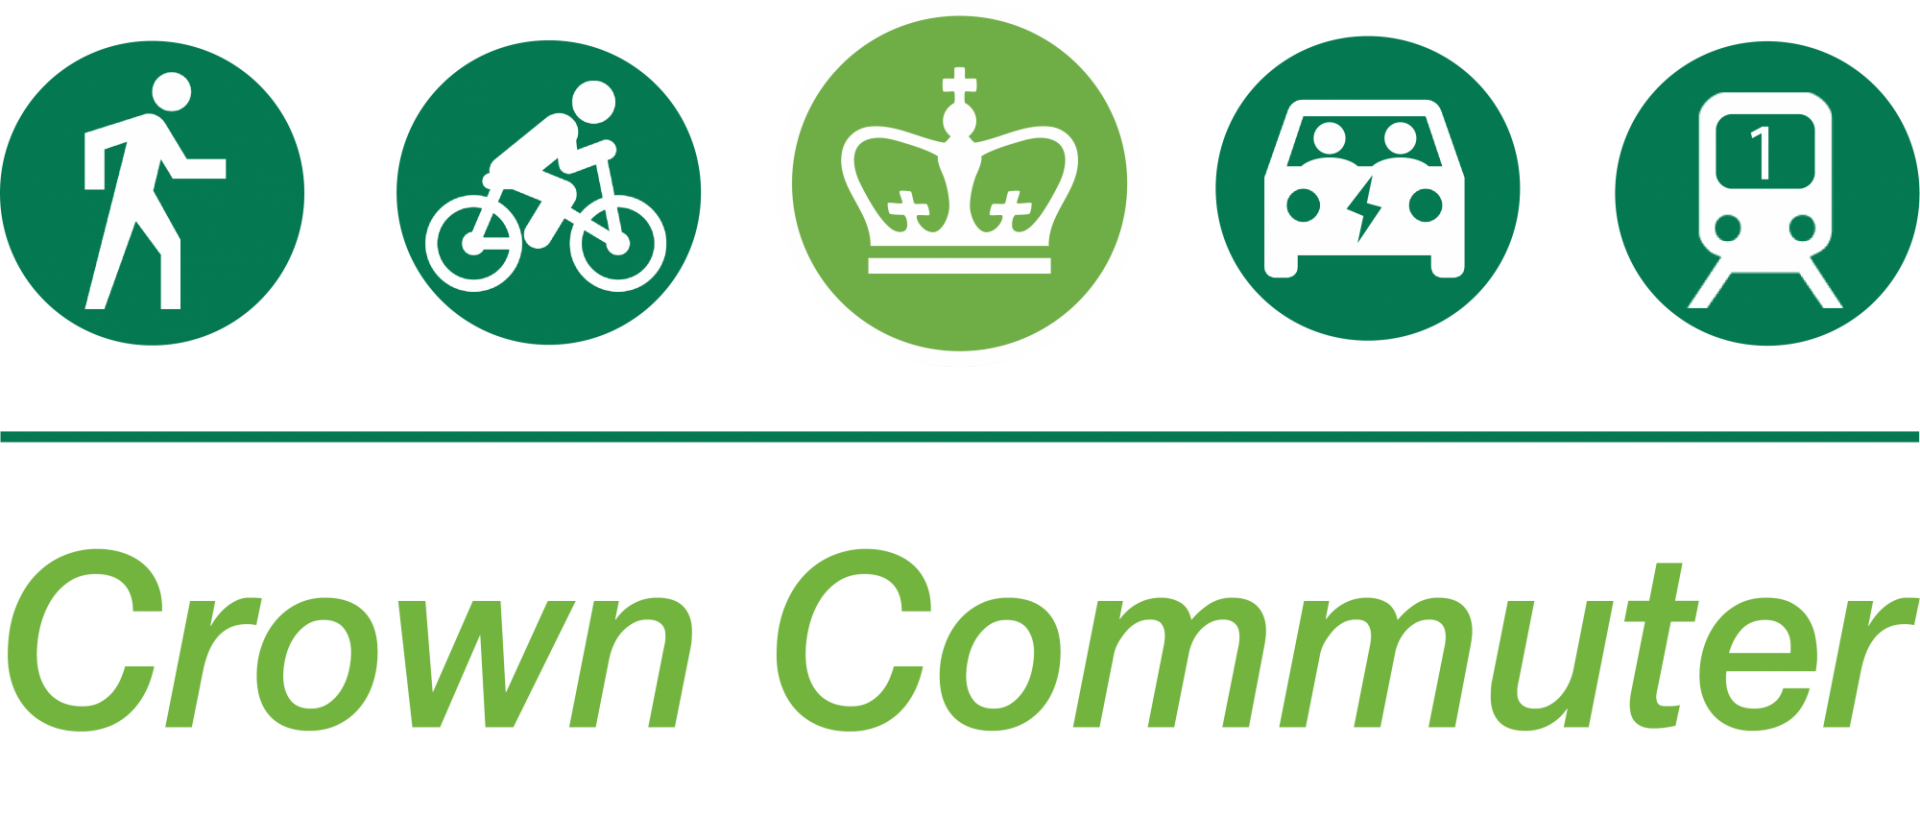 Crown Commuter logo